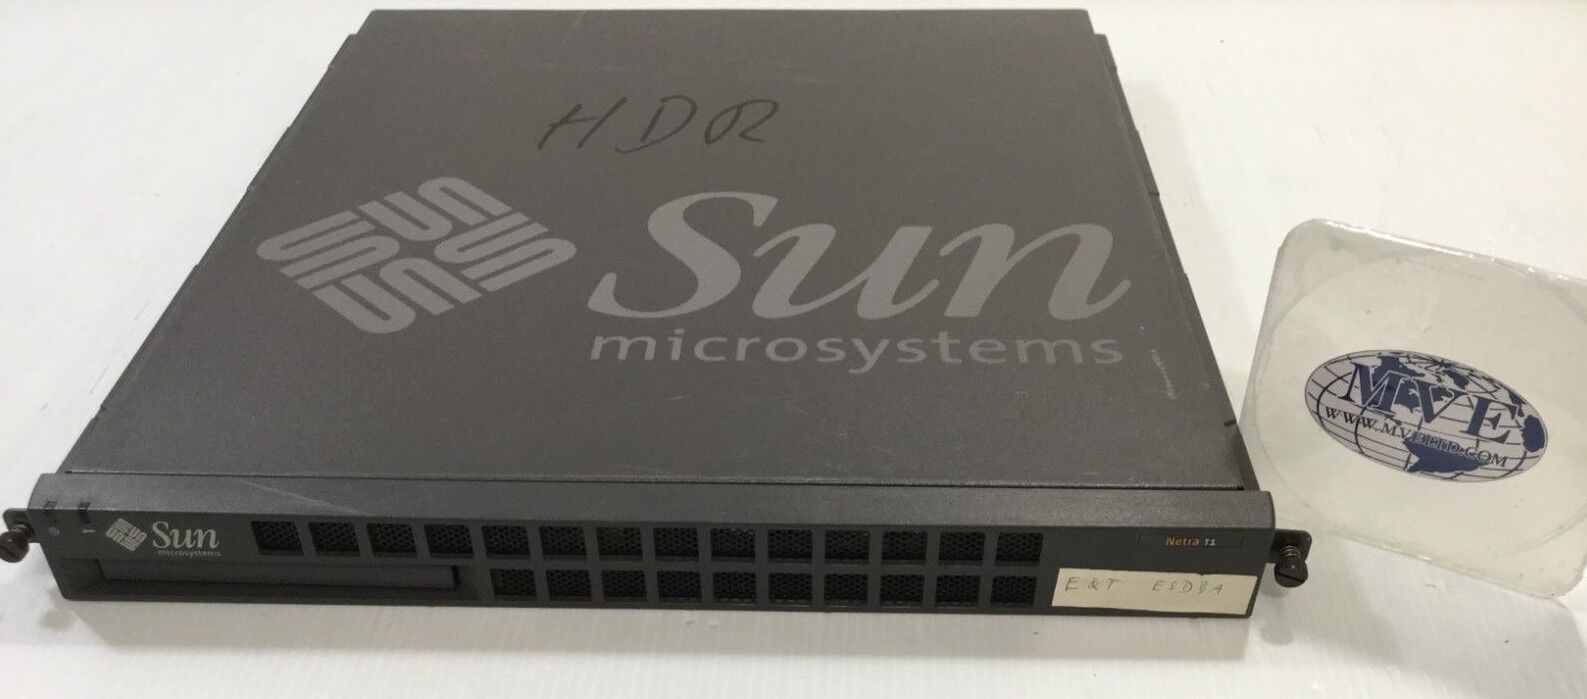 SUN MICROSYSTEMS 380-0389-03 NETRA T1 NETWORK SERVER 256MB RAM NO HARD DRIVE